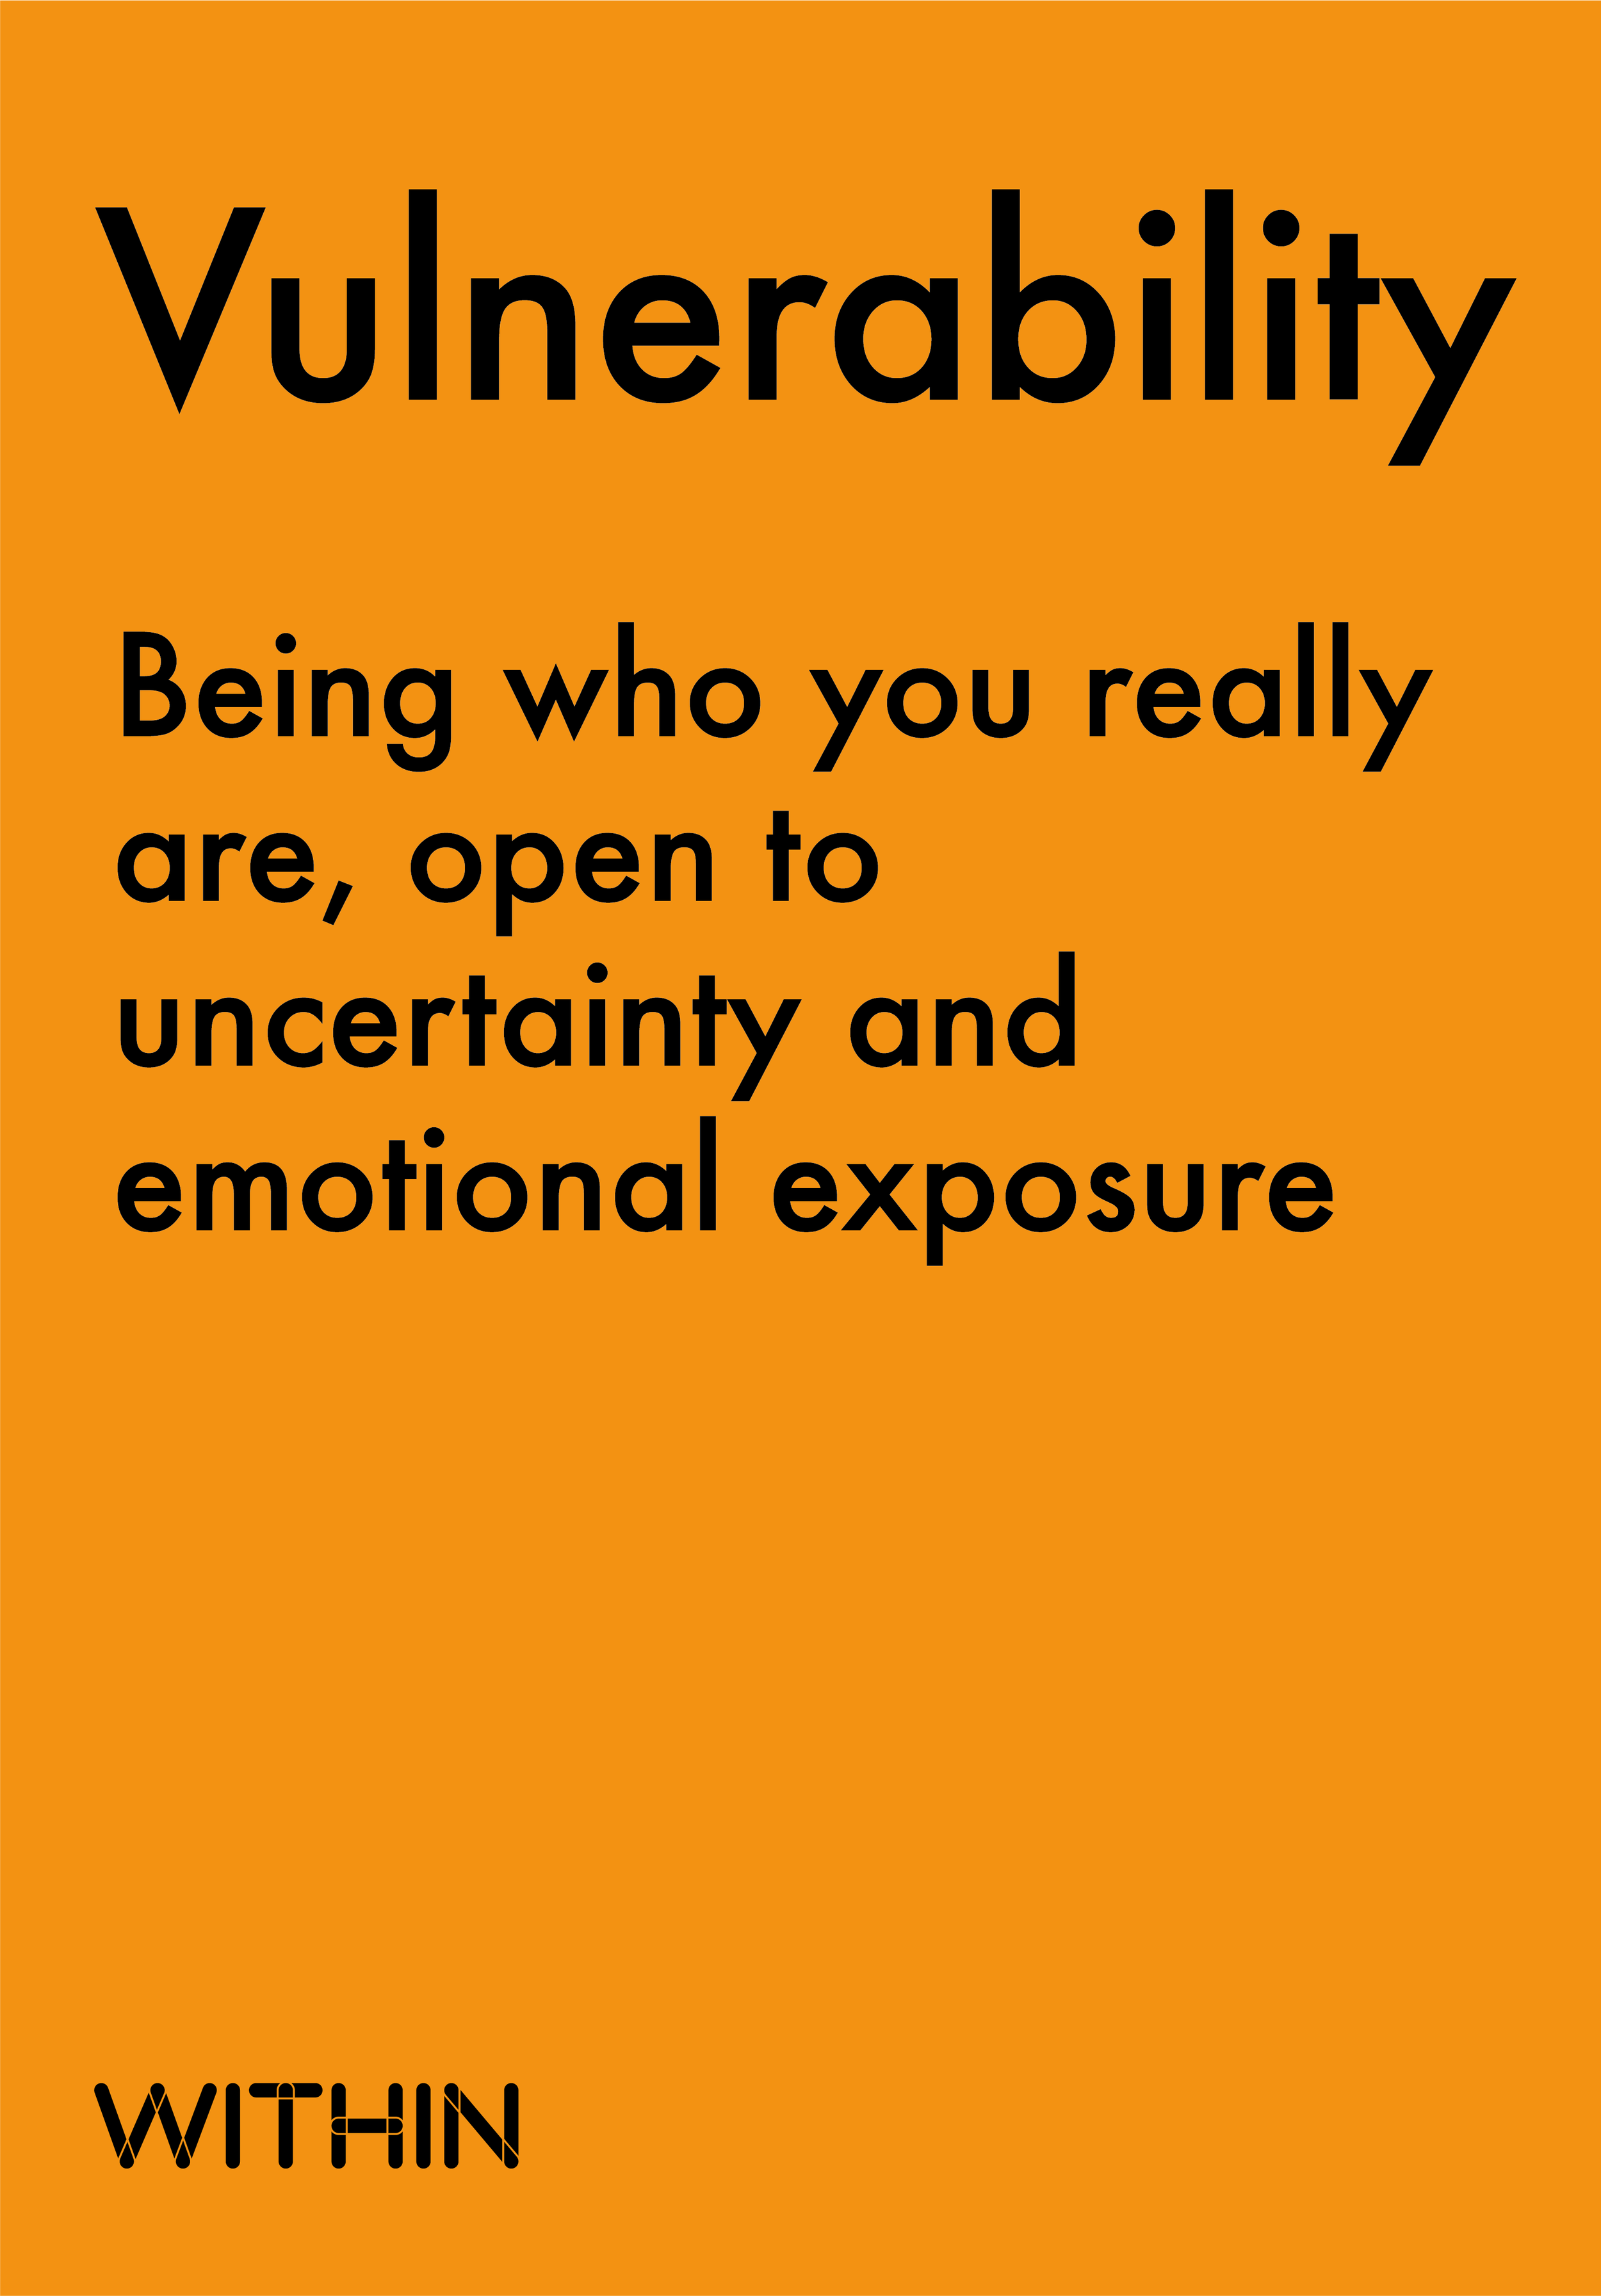 Human-Centred Leadership Values 1 Vulnerability